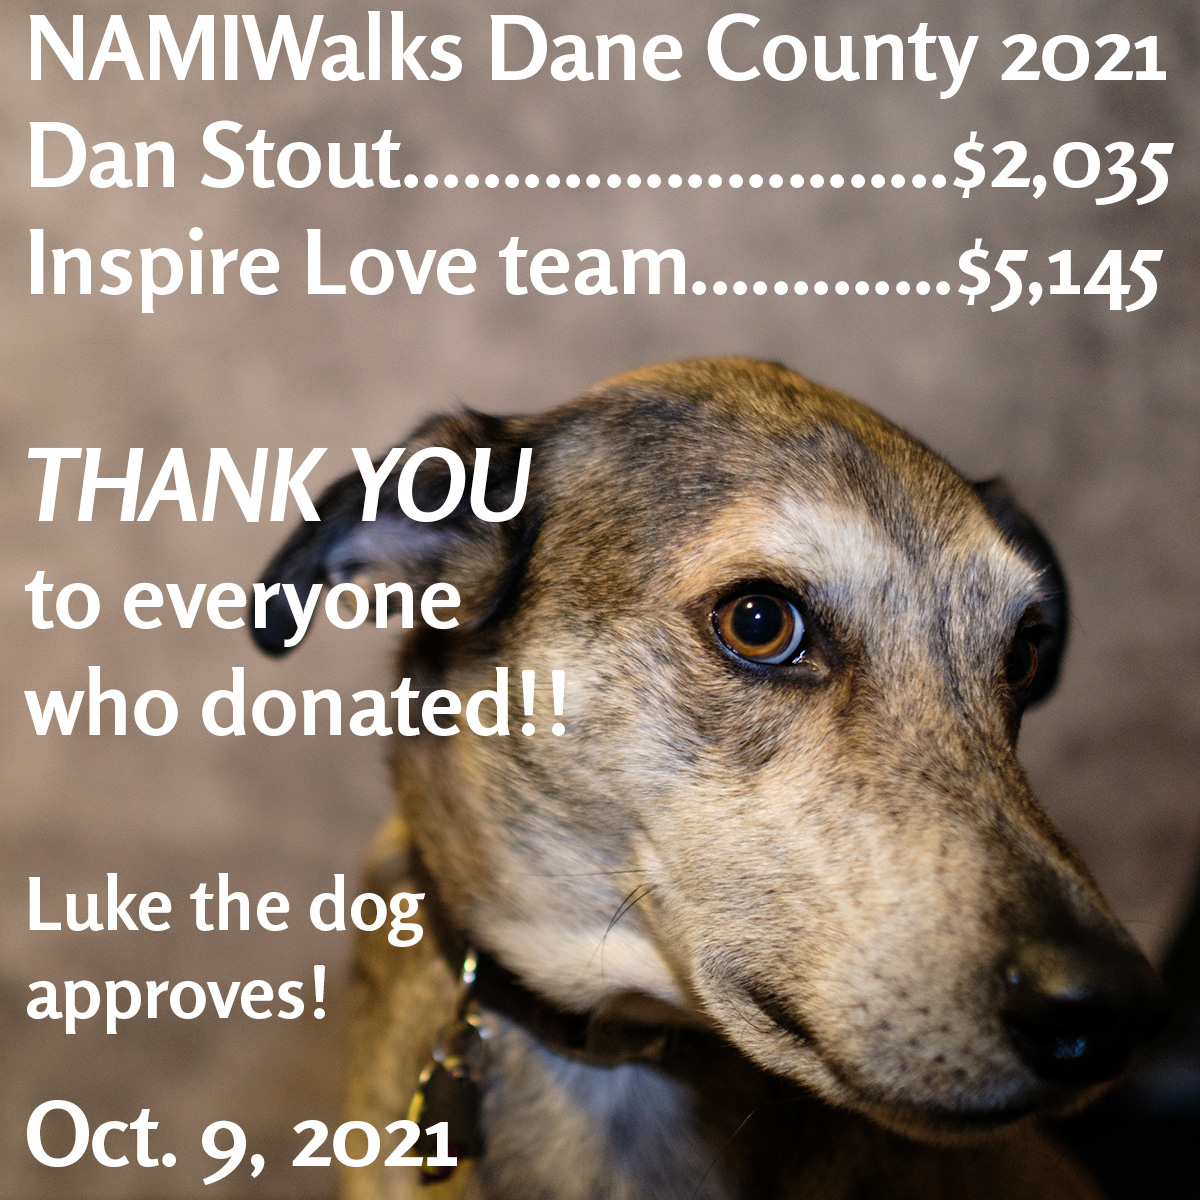 NAMIWalks Dane County 2021 fundraising